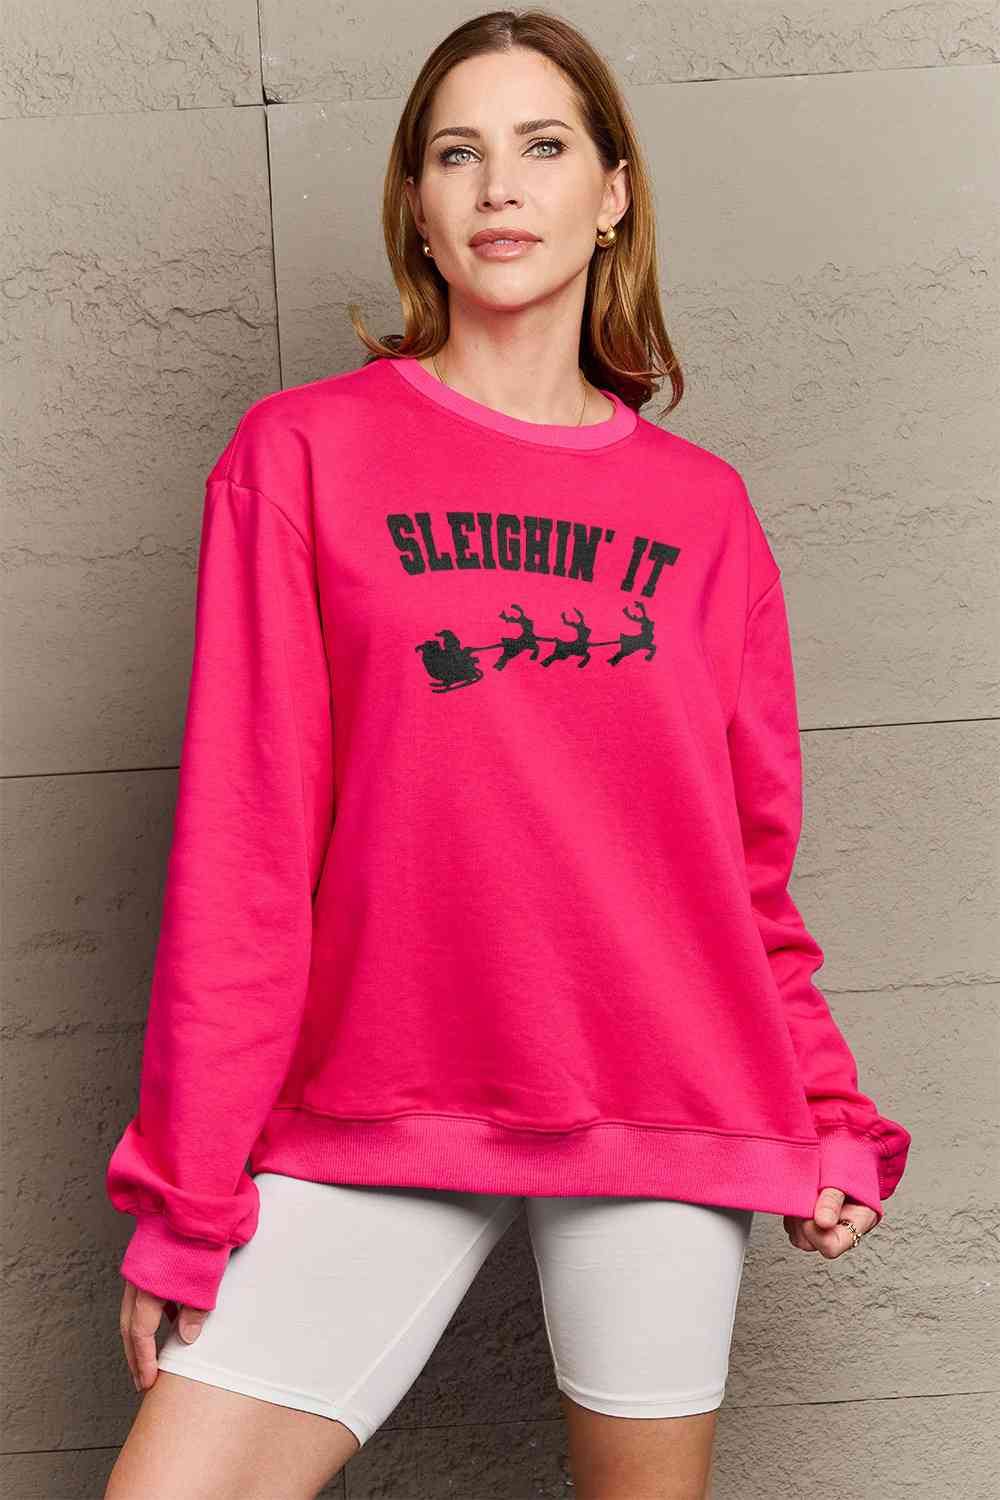 Simply Love Full Size SLEIGHIN' IT Graphic Sweatshirt